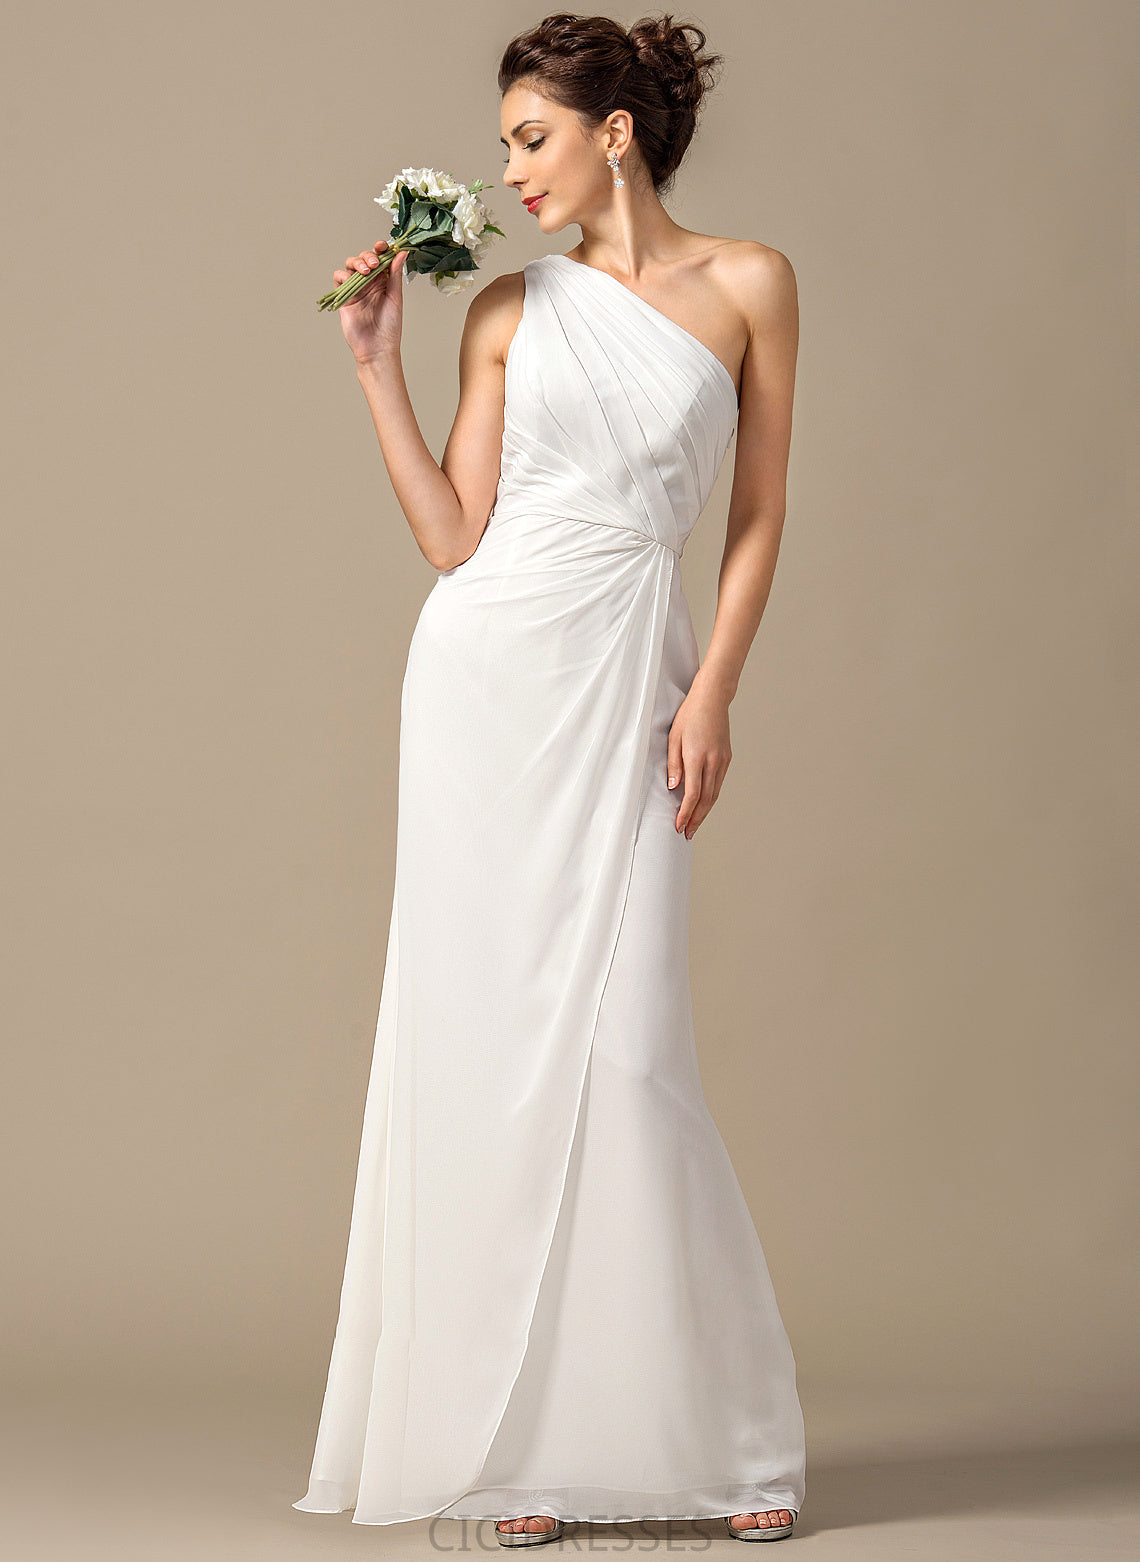 Embellishment Sheath/Column Fabric Length Floor-Length Ruffle Neckline One-Shoulder Silhouette Corinne Cap Sleeves V-Neck Bridesmaid Dresses